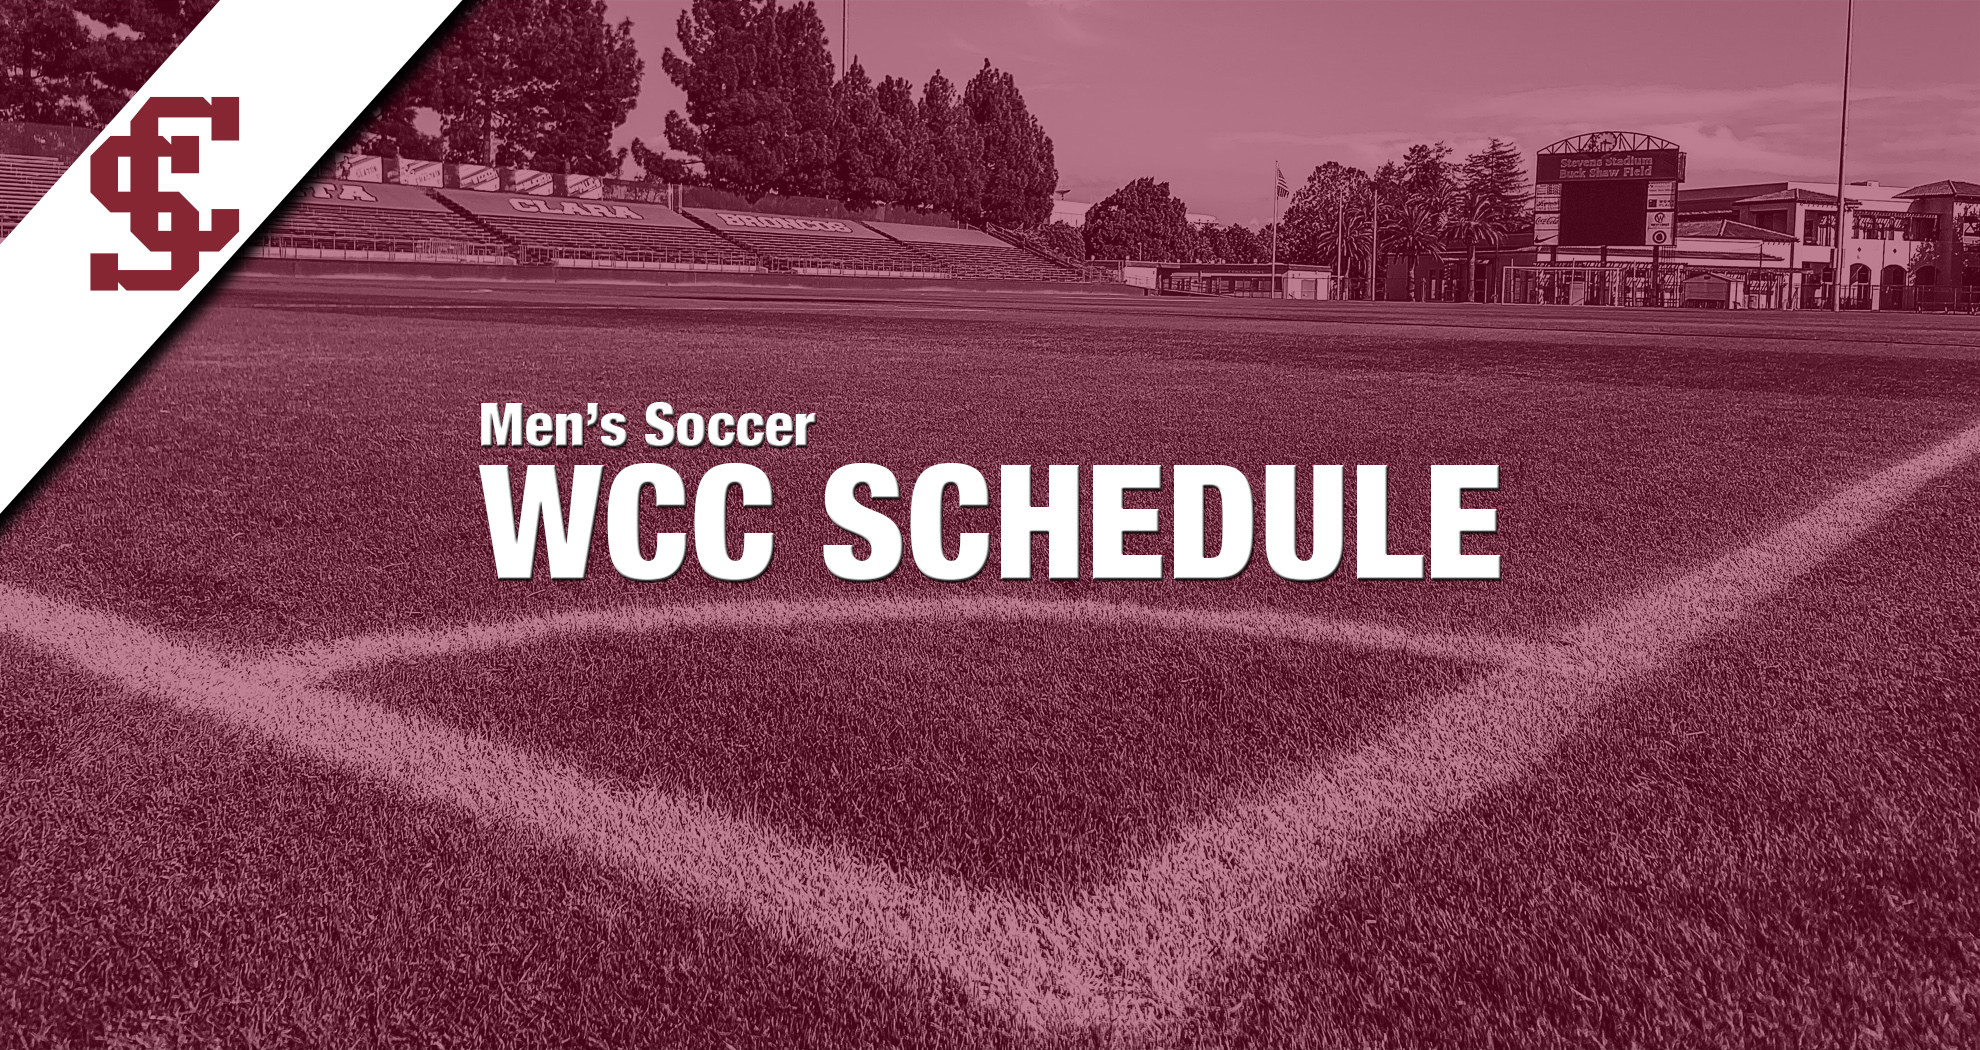 West Coast Conference Announces Schedule for Men’s Soccer